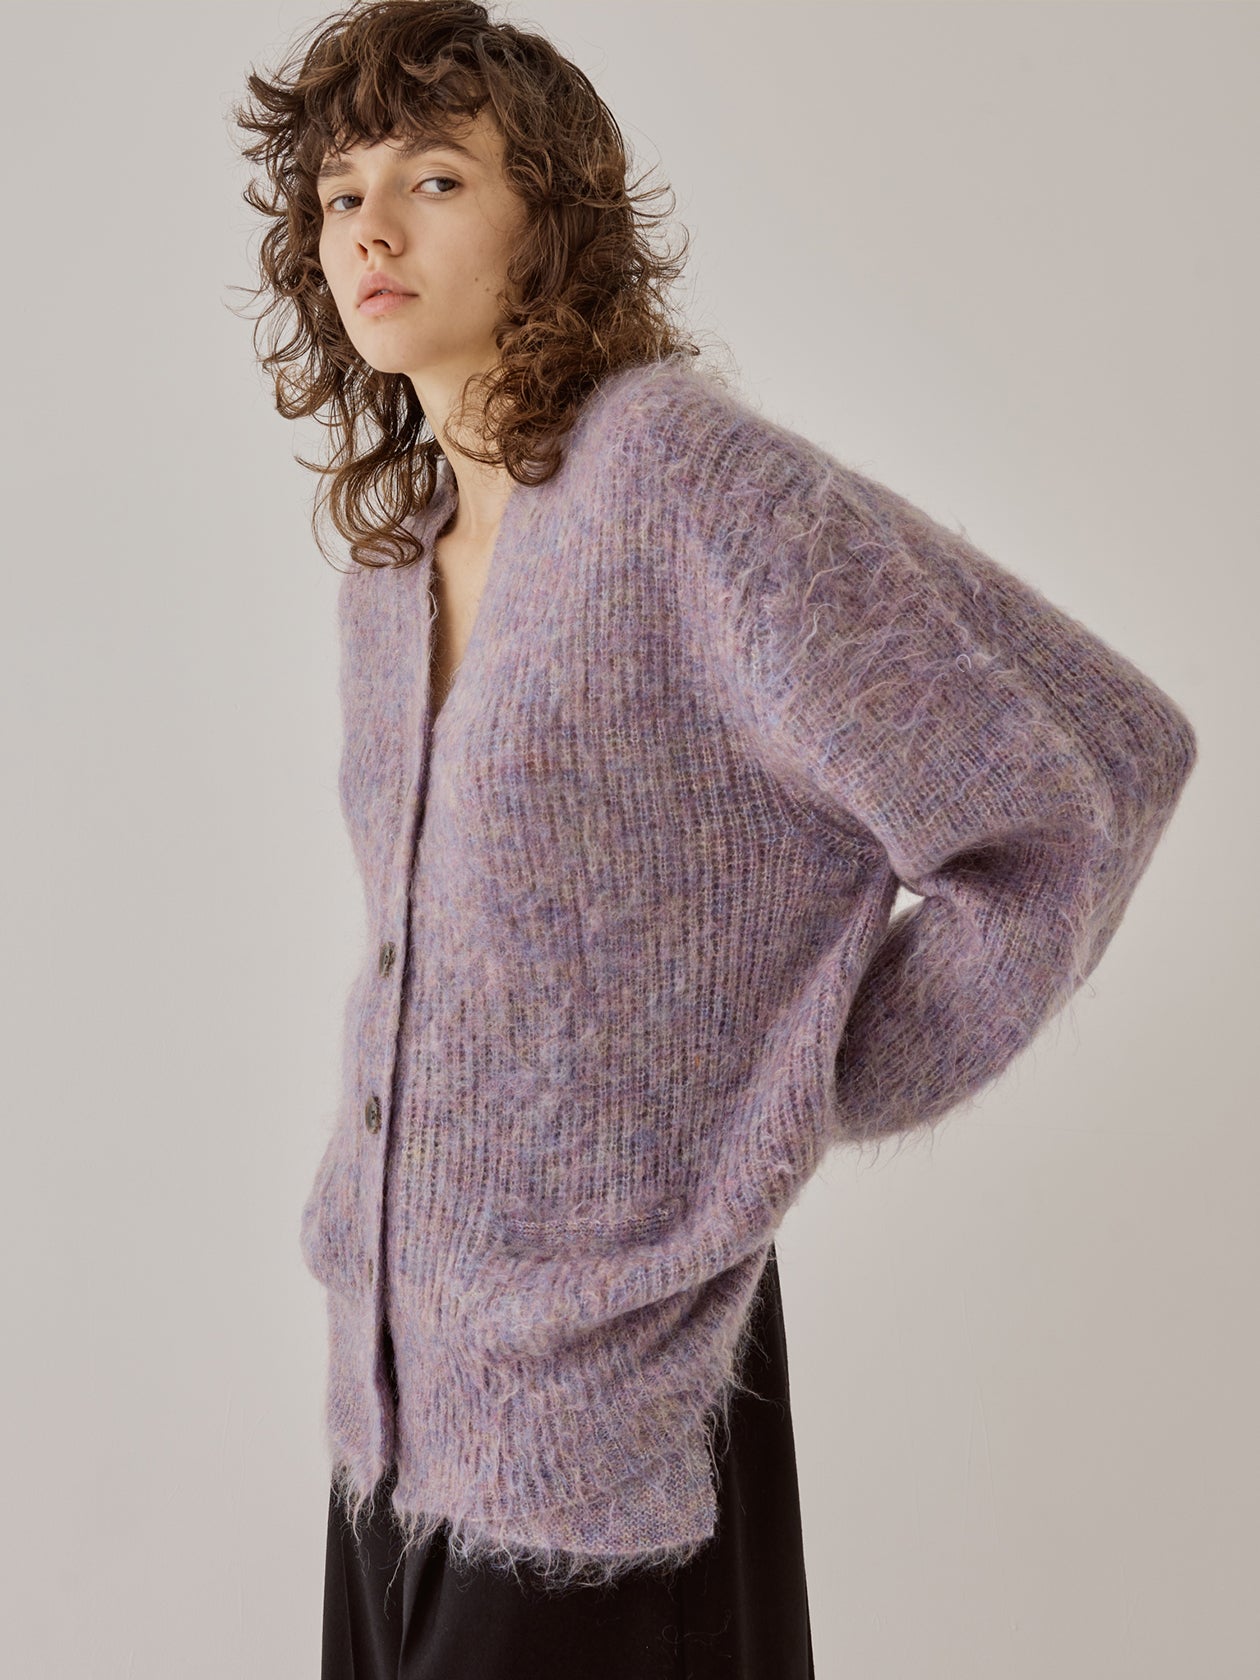 Lies shaggy knit cardigan PU